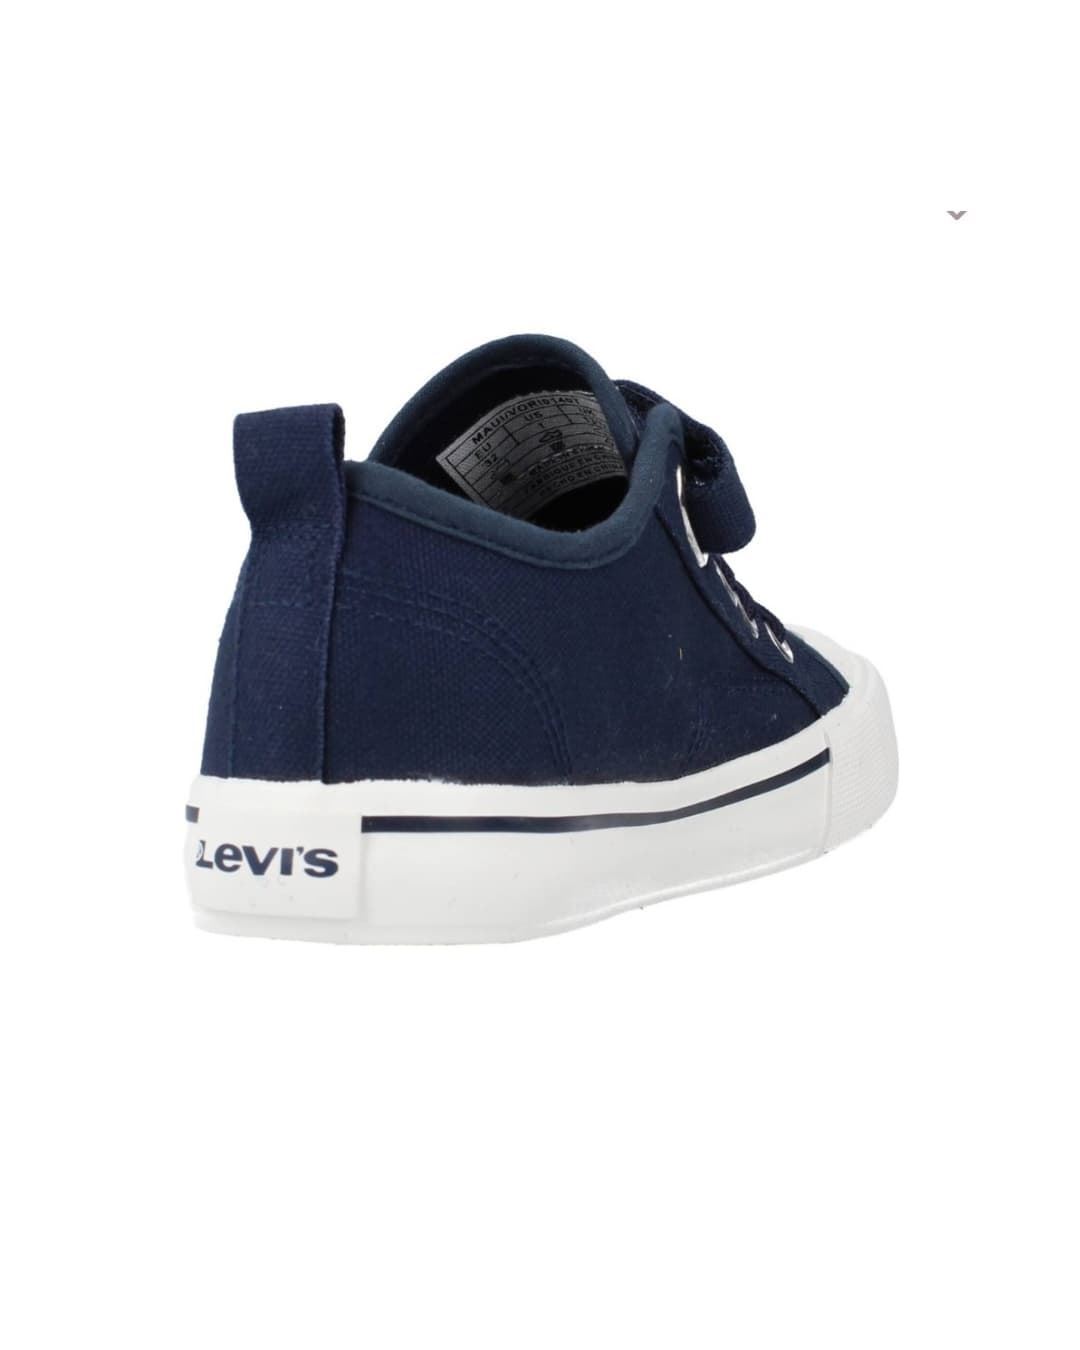 Levi's Unisex Kids Navy Blue Canvas Sneakers - Image 4